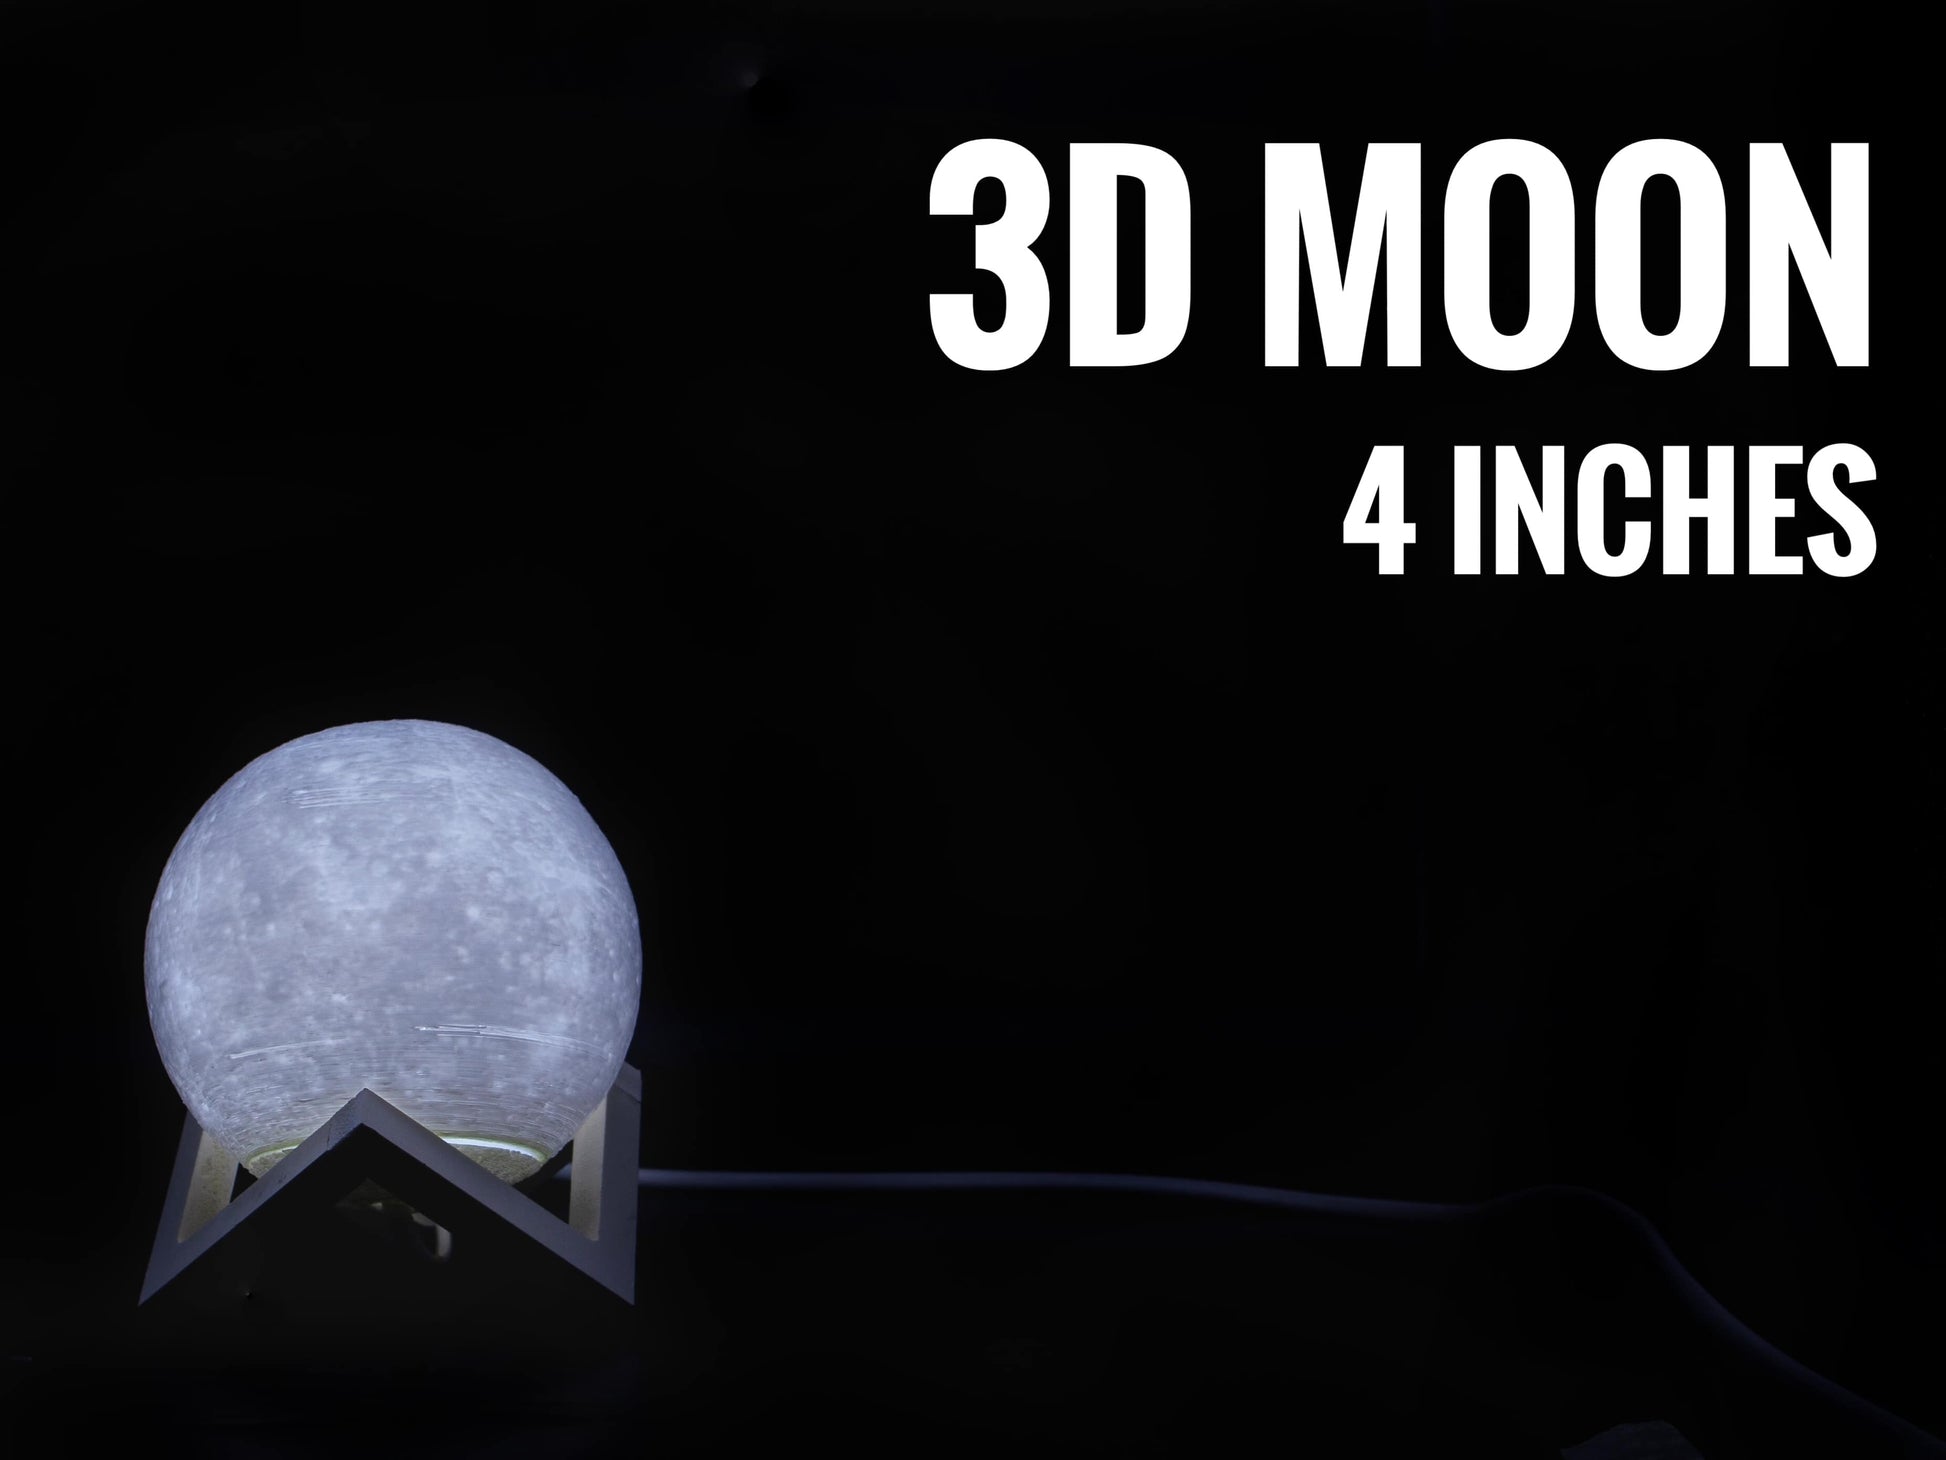 Photo Moon Lamp 3D Moon Shop